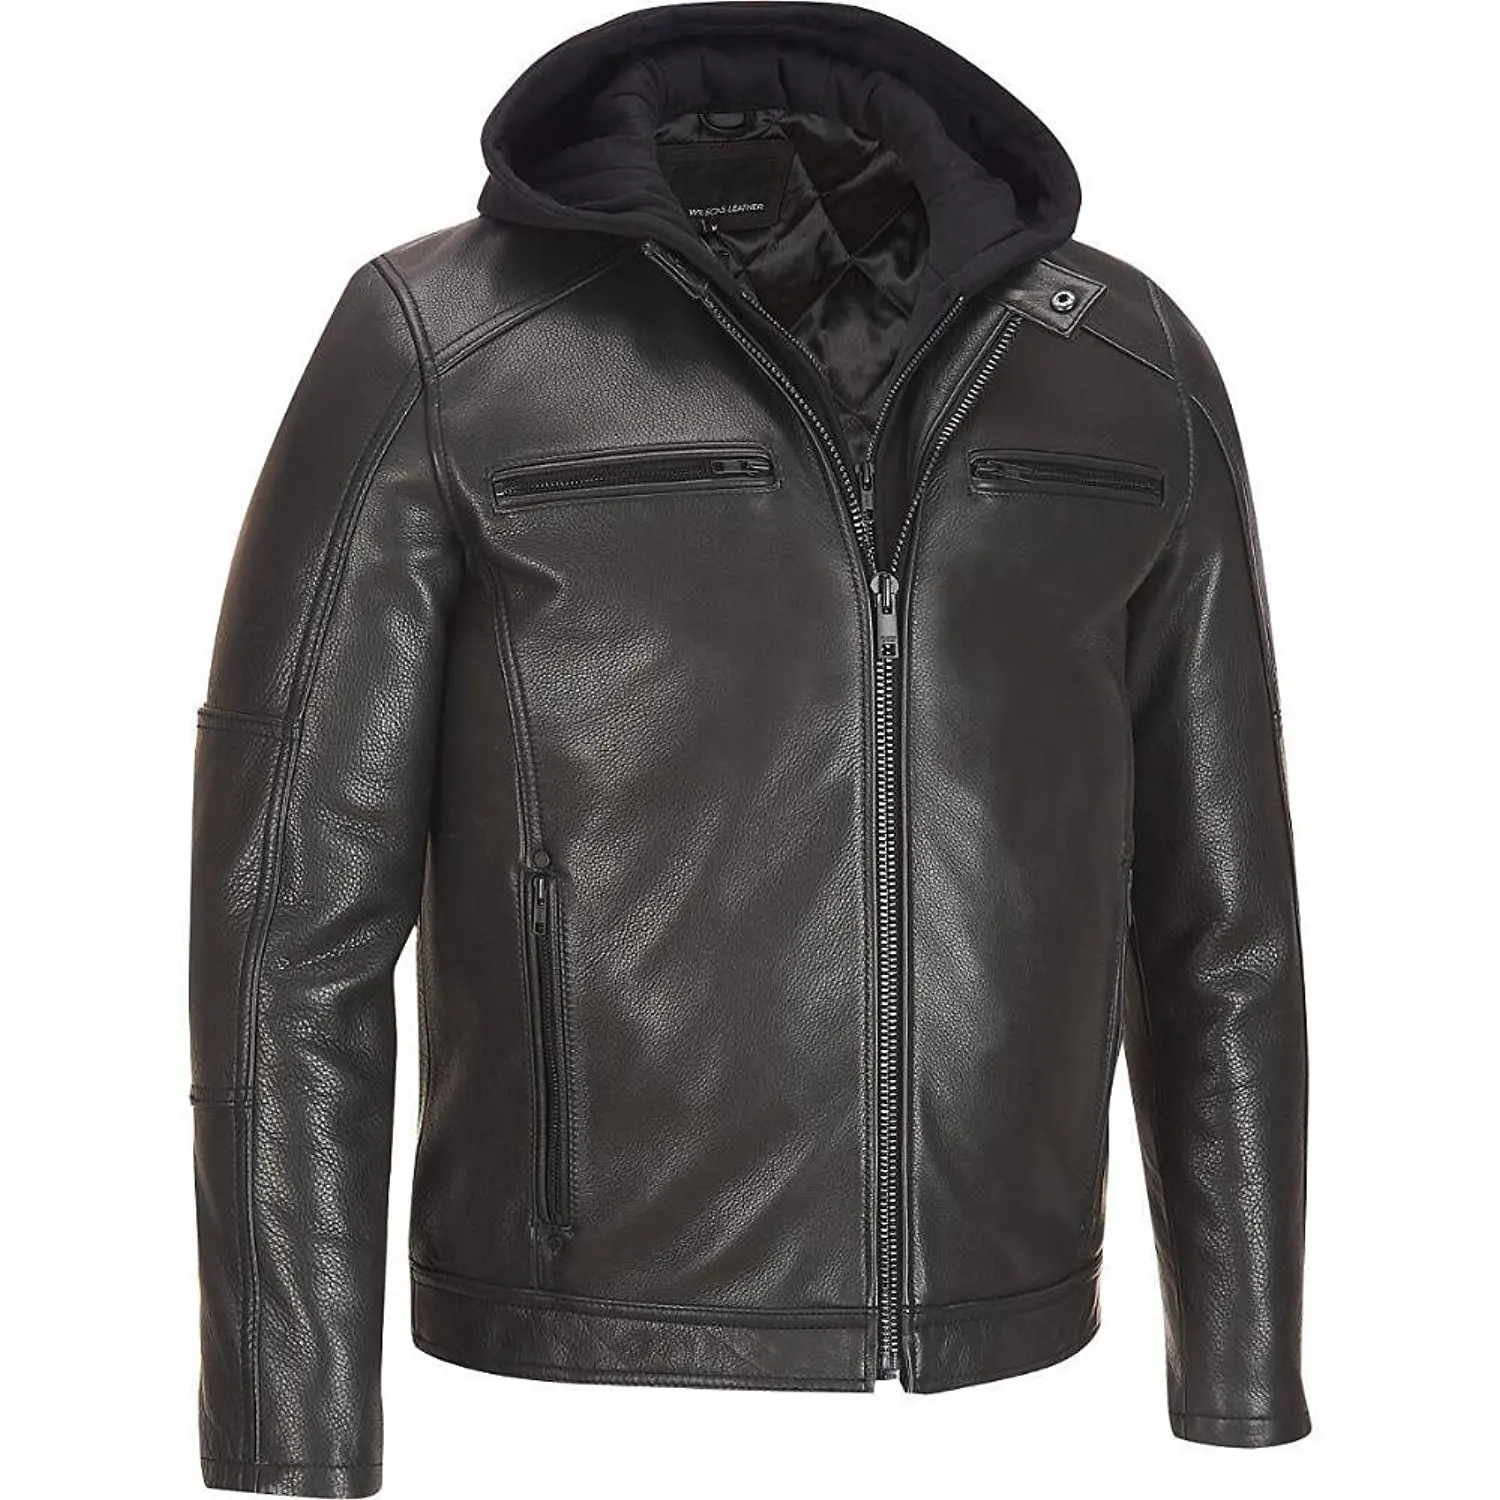 Куртка кожа садовод. Кожаная куртка Leather Air Jacket 38118. Алеф кожаные куртки мужские. Куртка Radloff 1927 кожаная мужская. Wilsons Leather куртка.